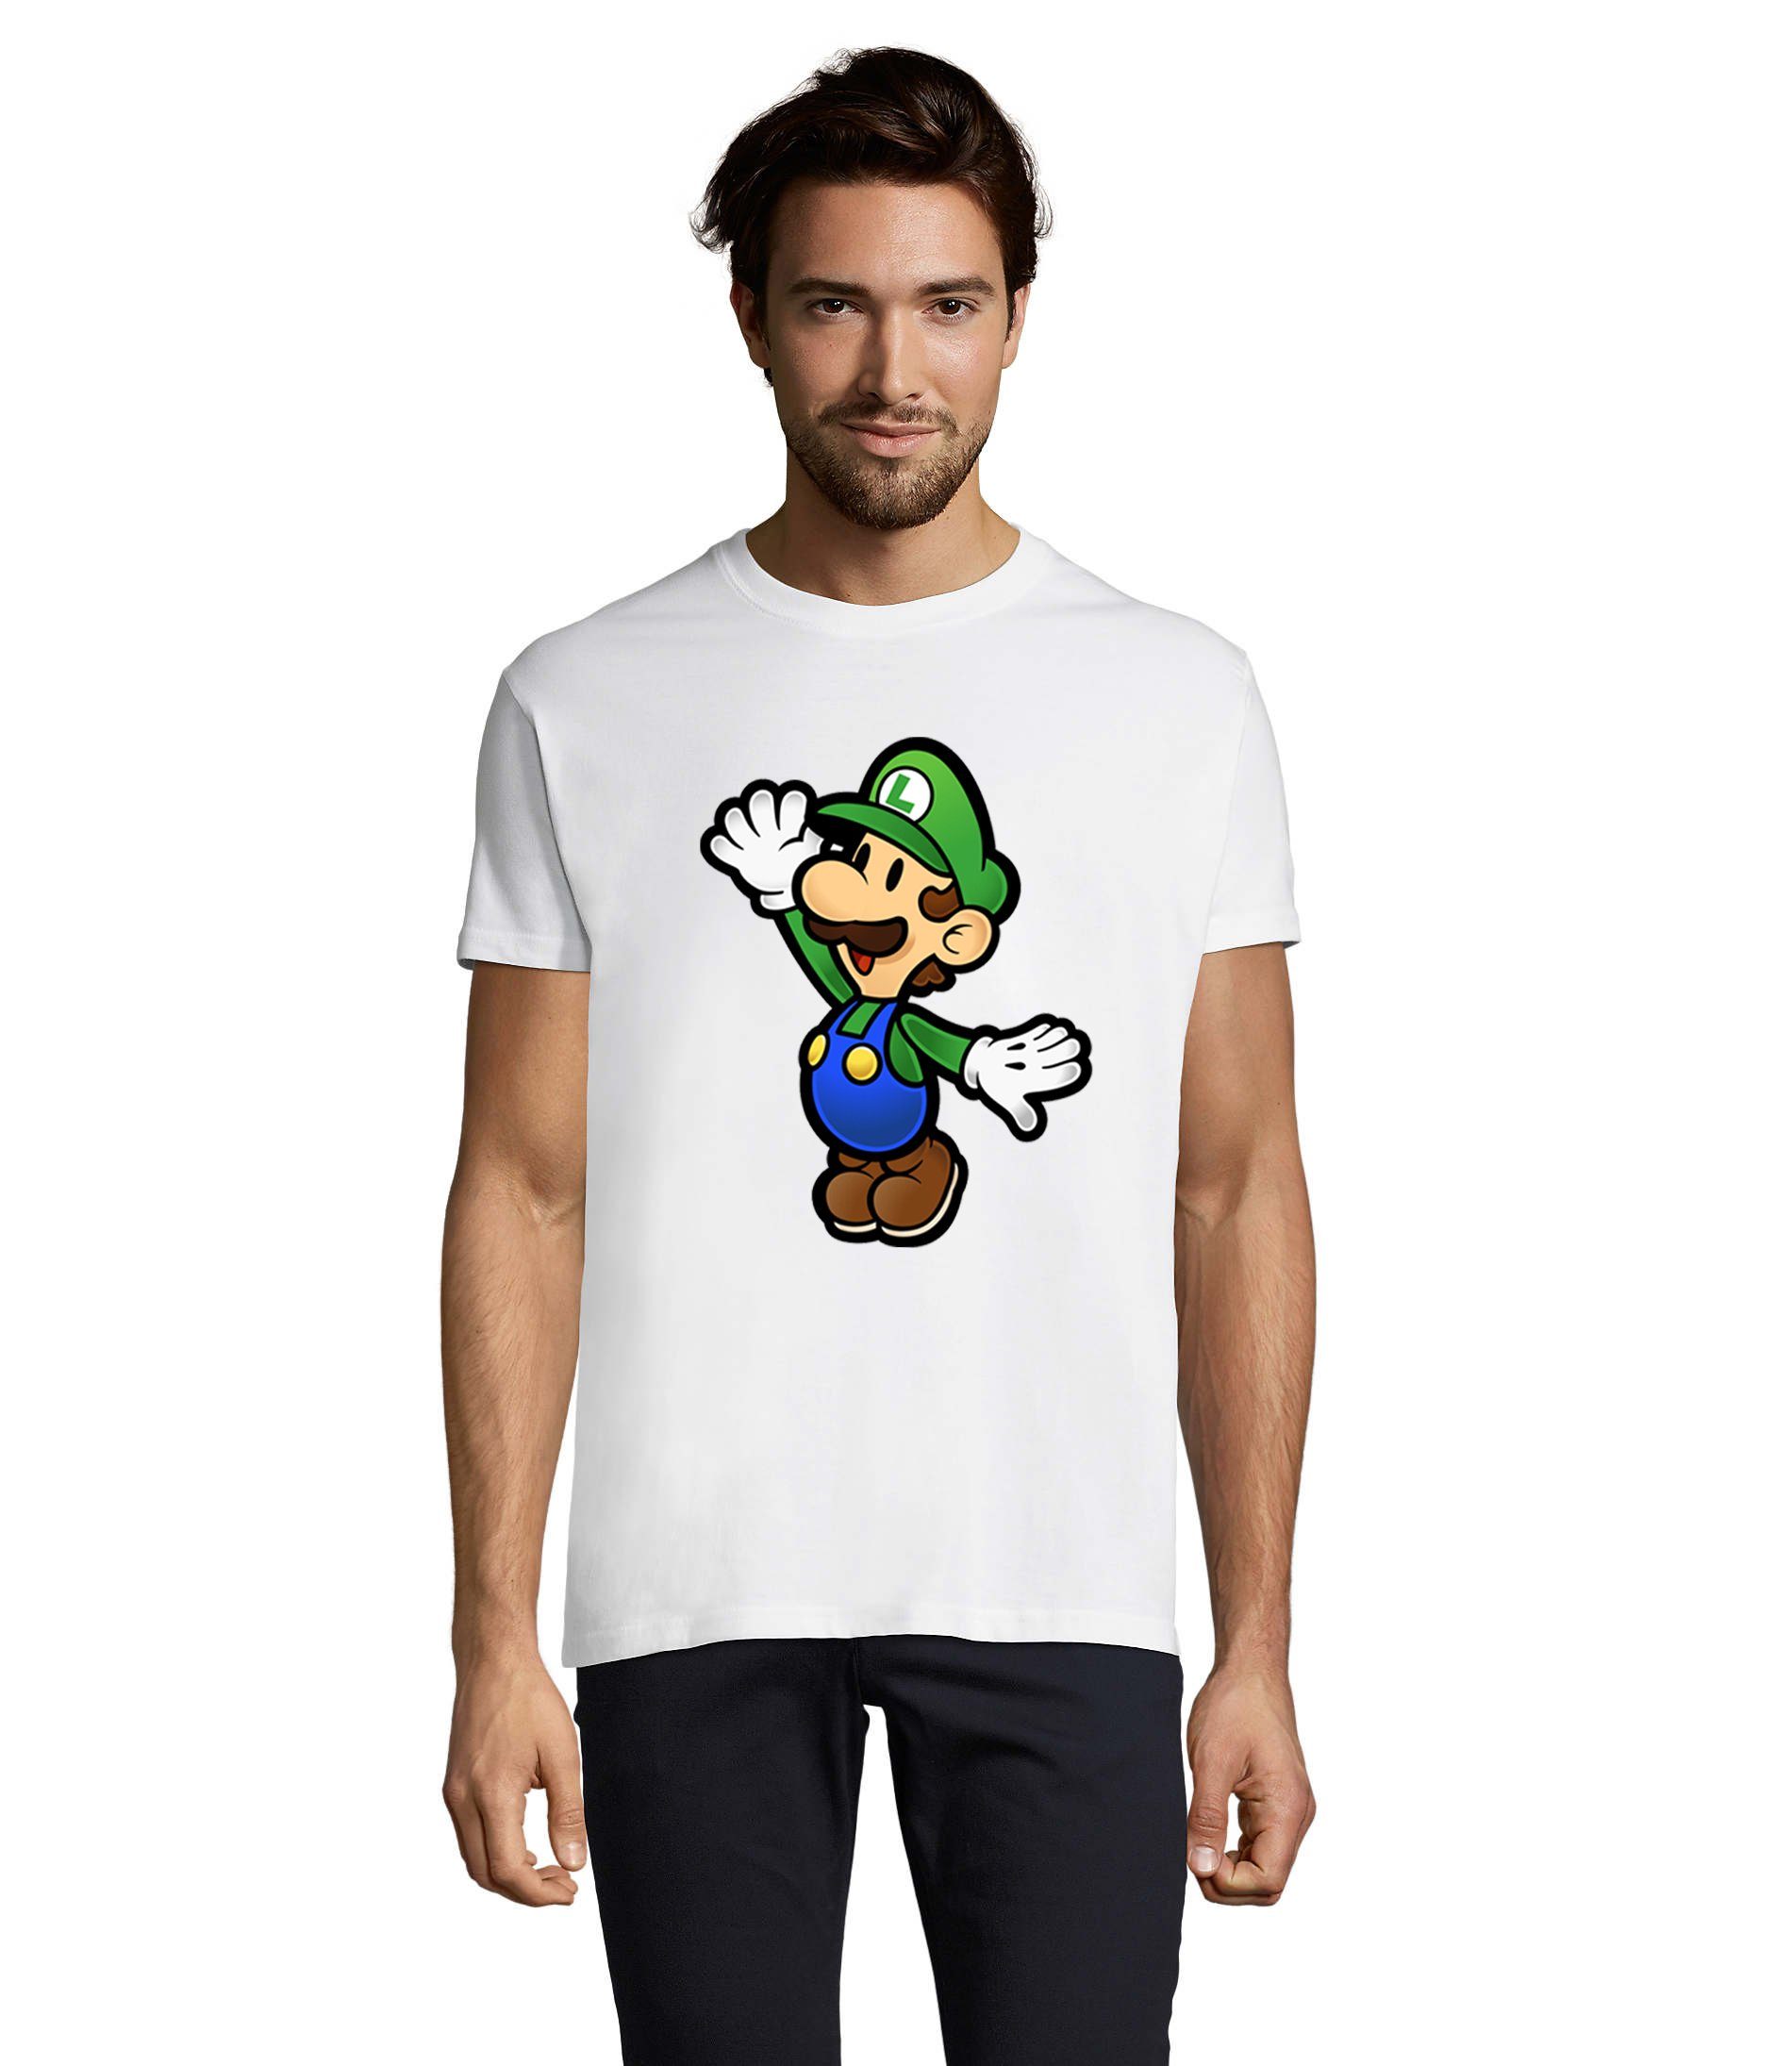 Blondie & Brownie T-Shirt Herren Luigi Nintendo Mario Peach Yoshi Gaming Weiß